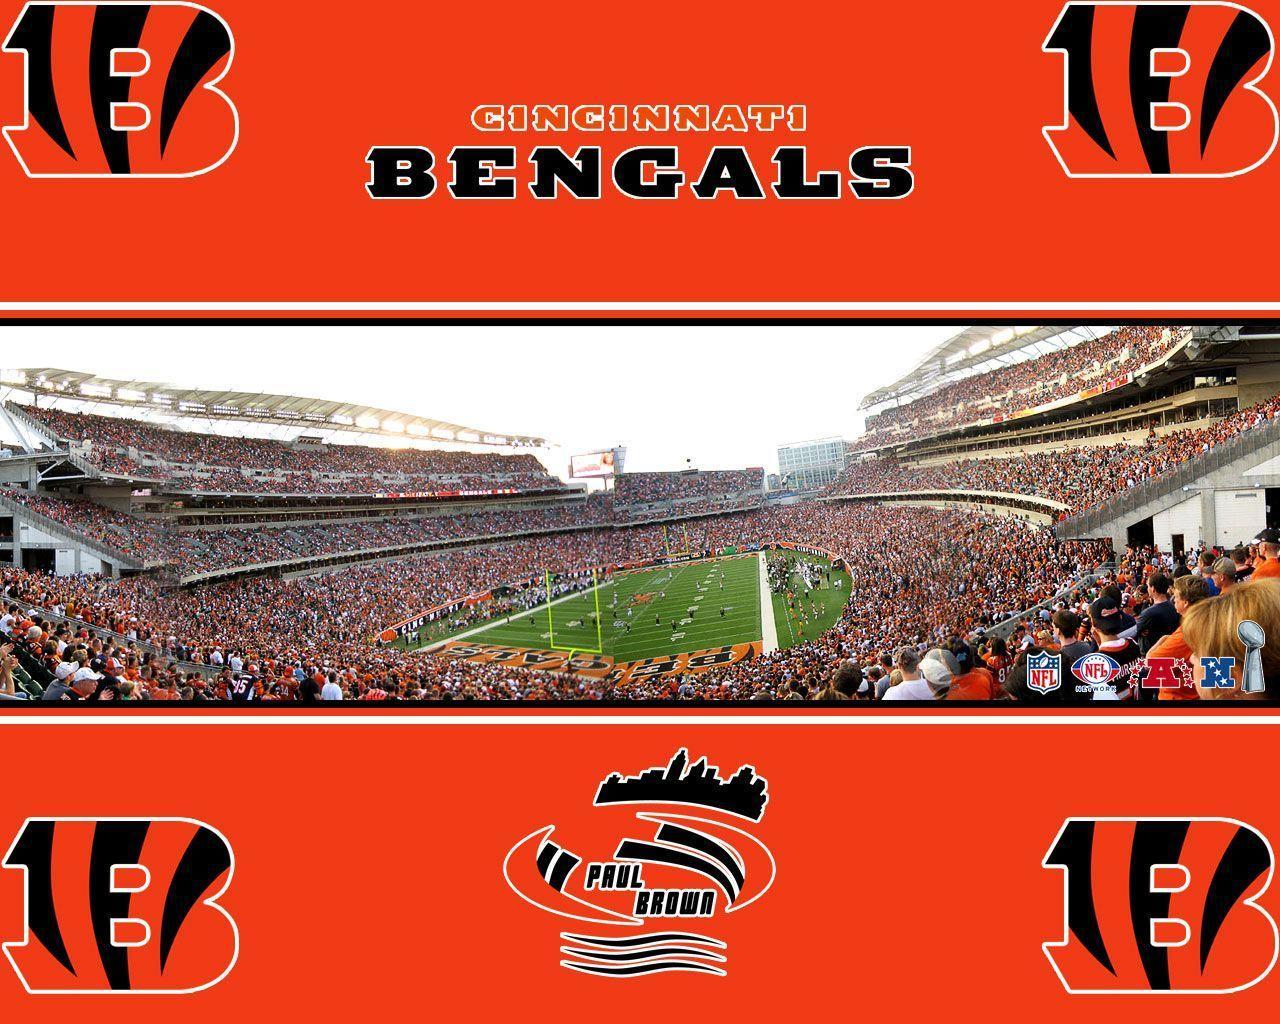 Cincinnati Bengals stadium wallpaper